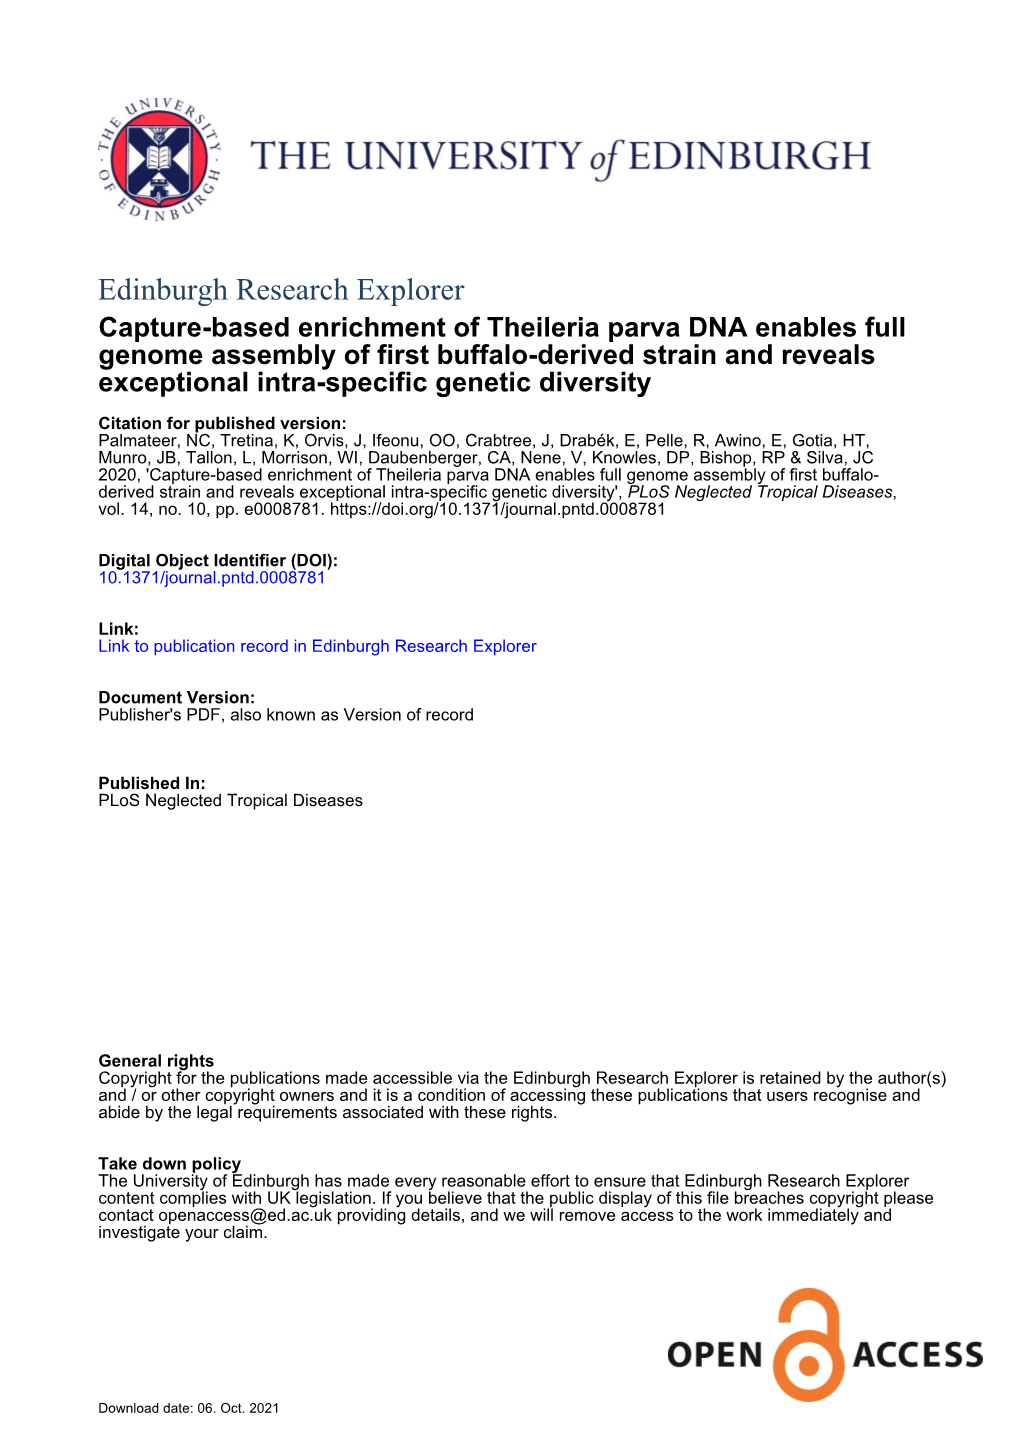 Capture-Based Enrichment of Theileria Parva DNA